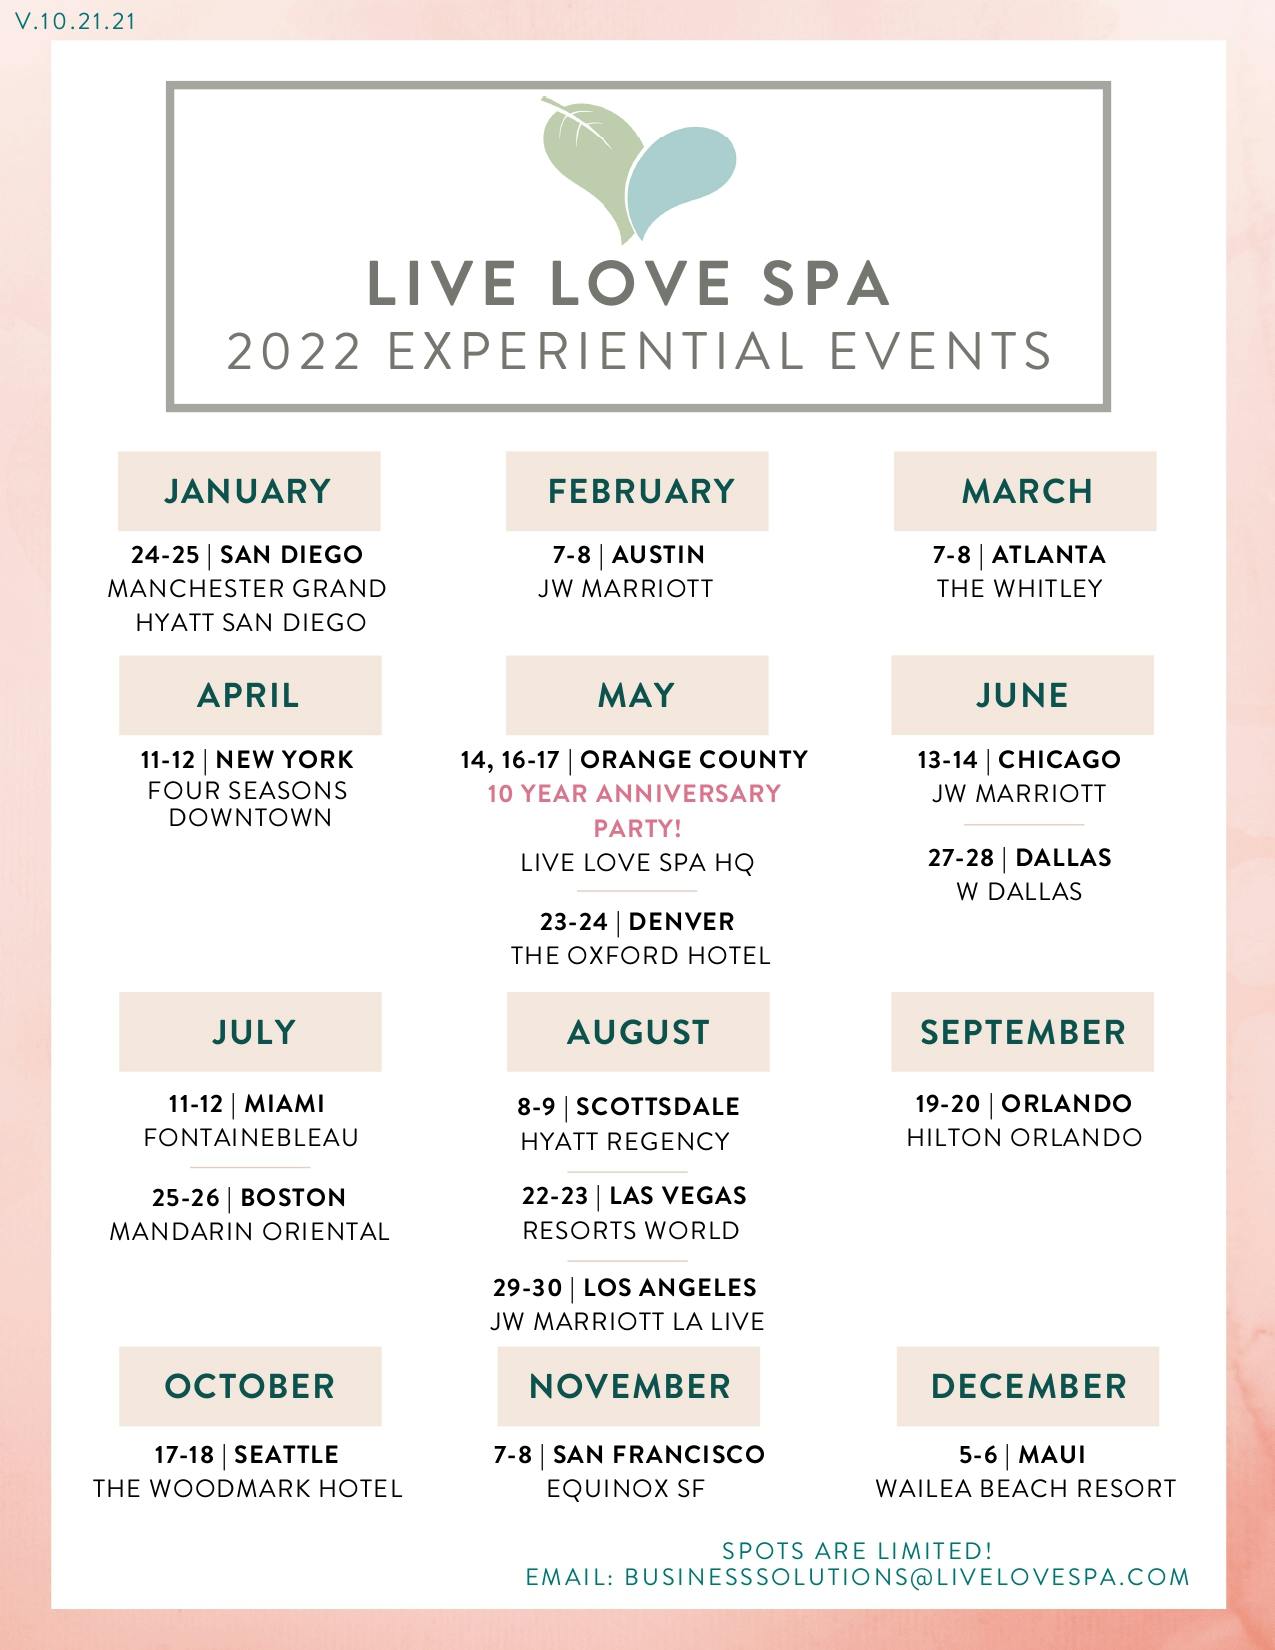 Miami Event Calendar 2022 Live Love Spa 2022 Events Calendar Released | Wellspa 360